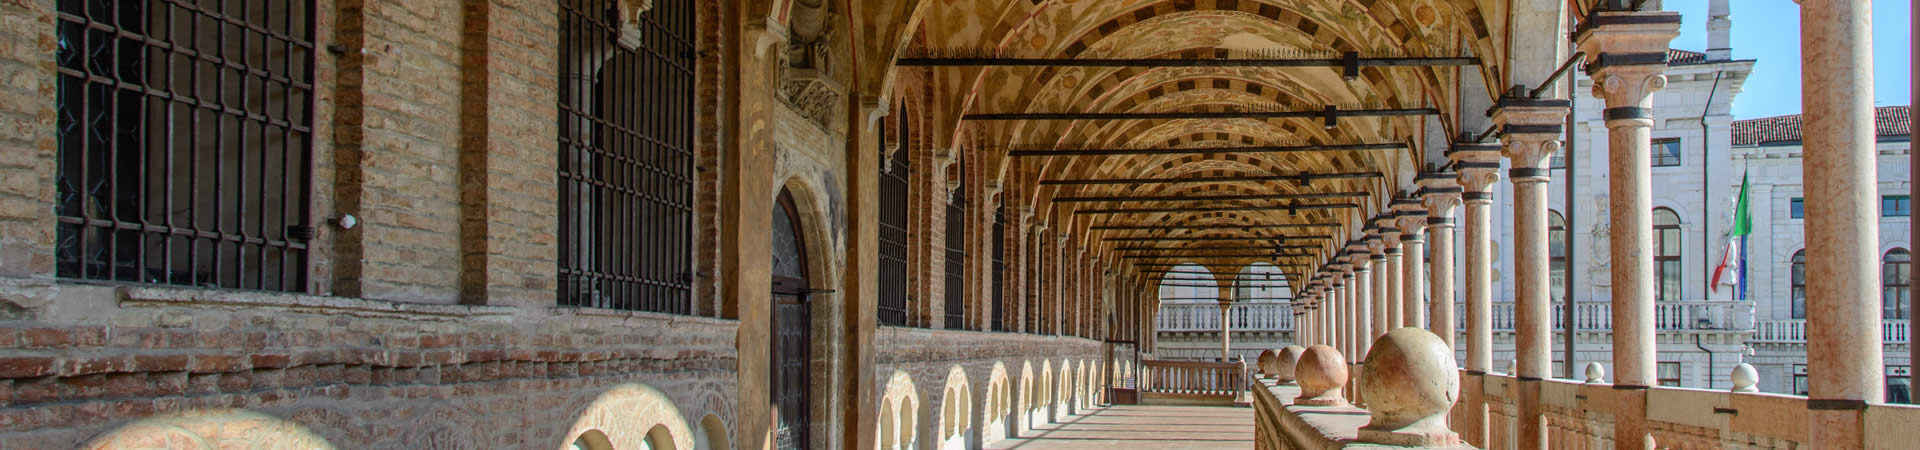 Padova arte e cultura